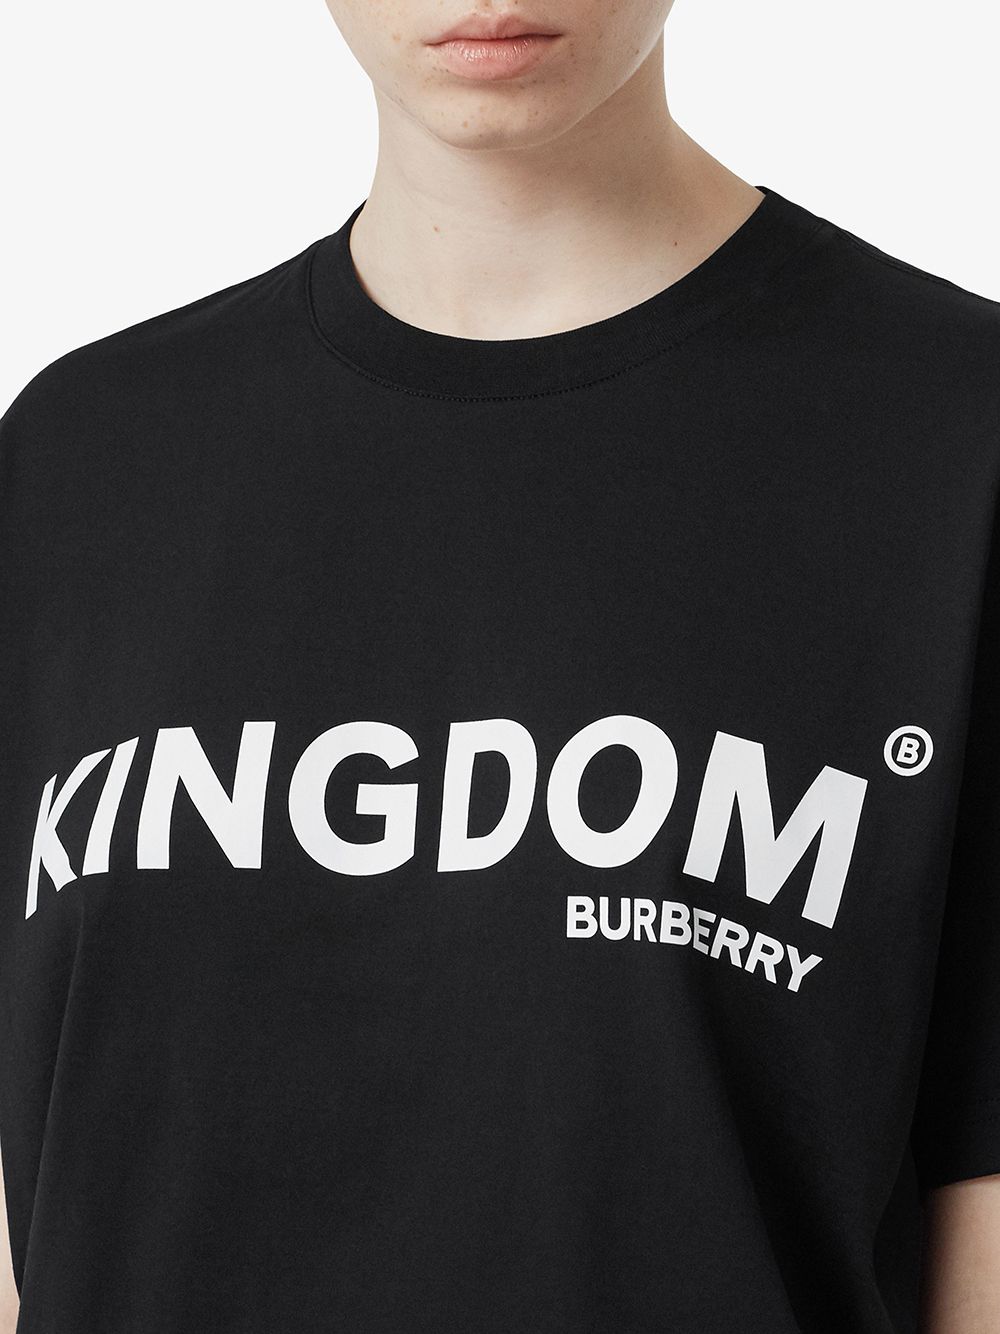 burberry kingdom